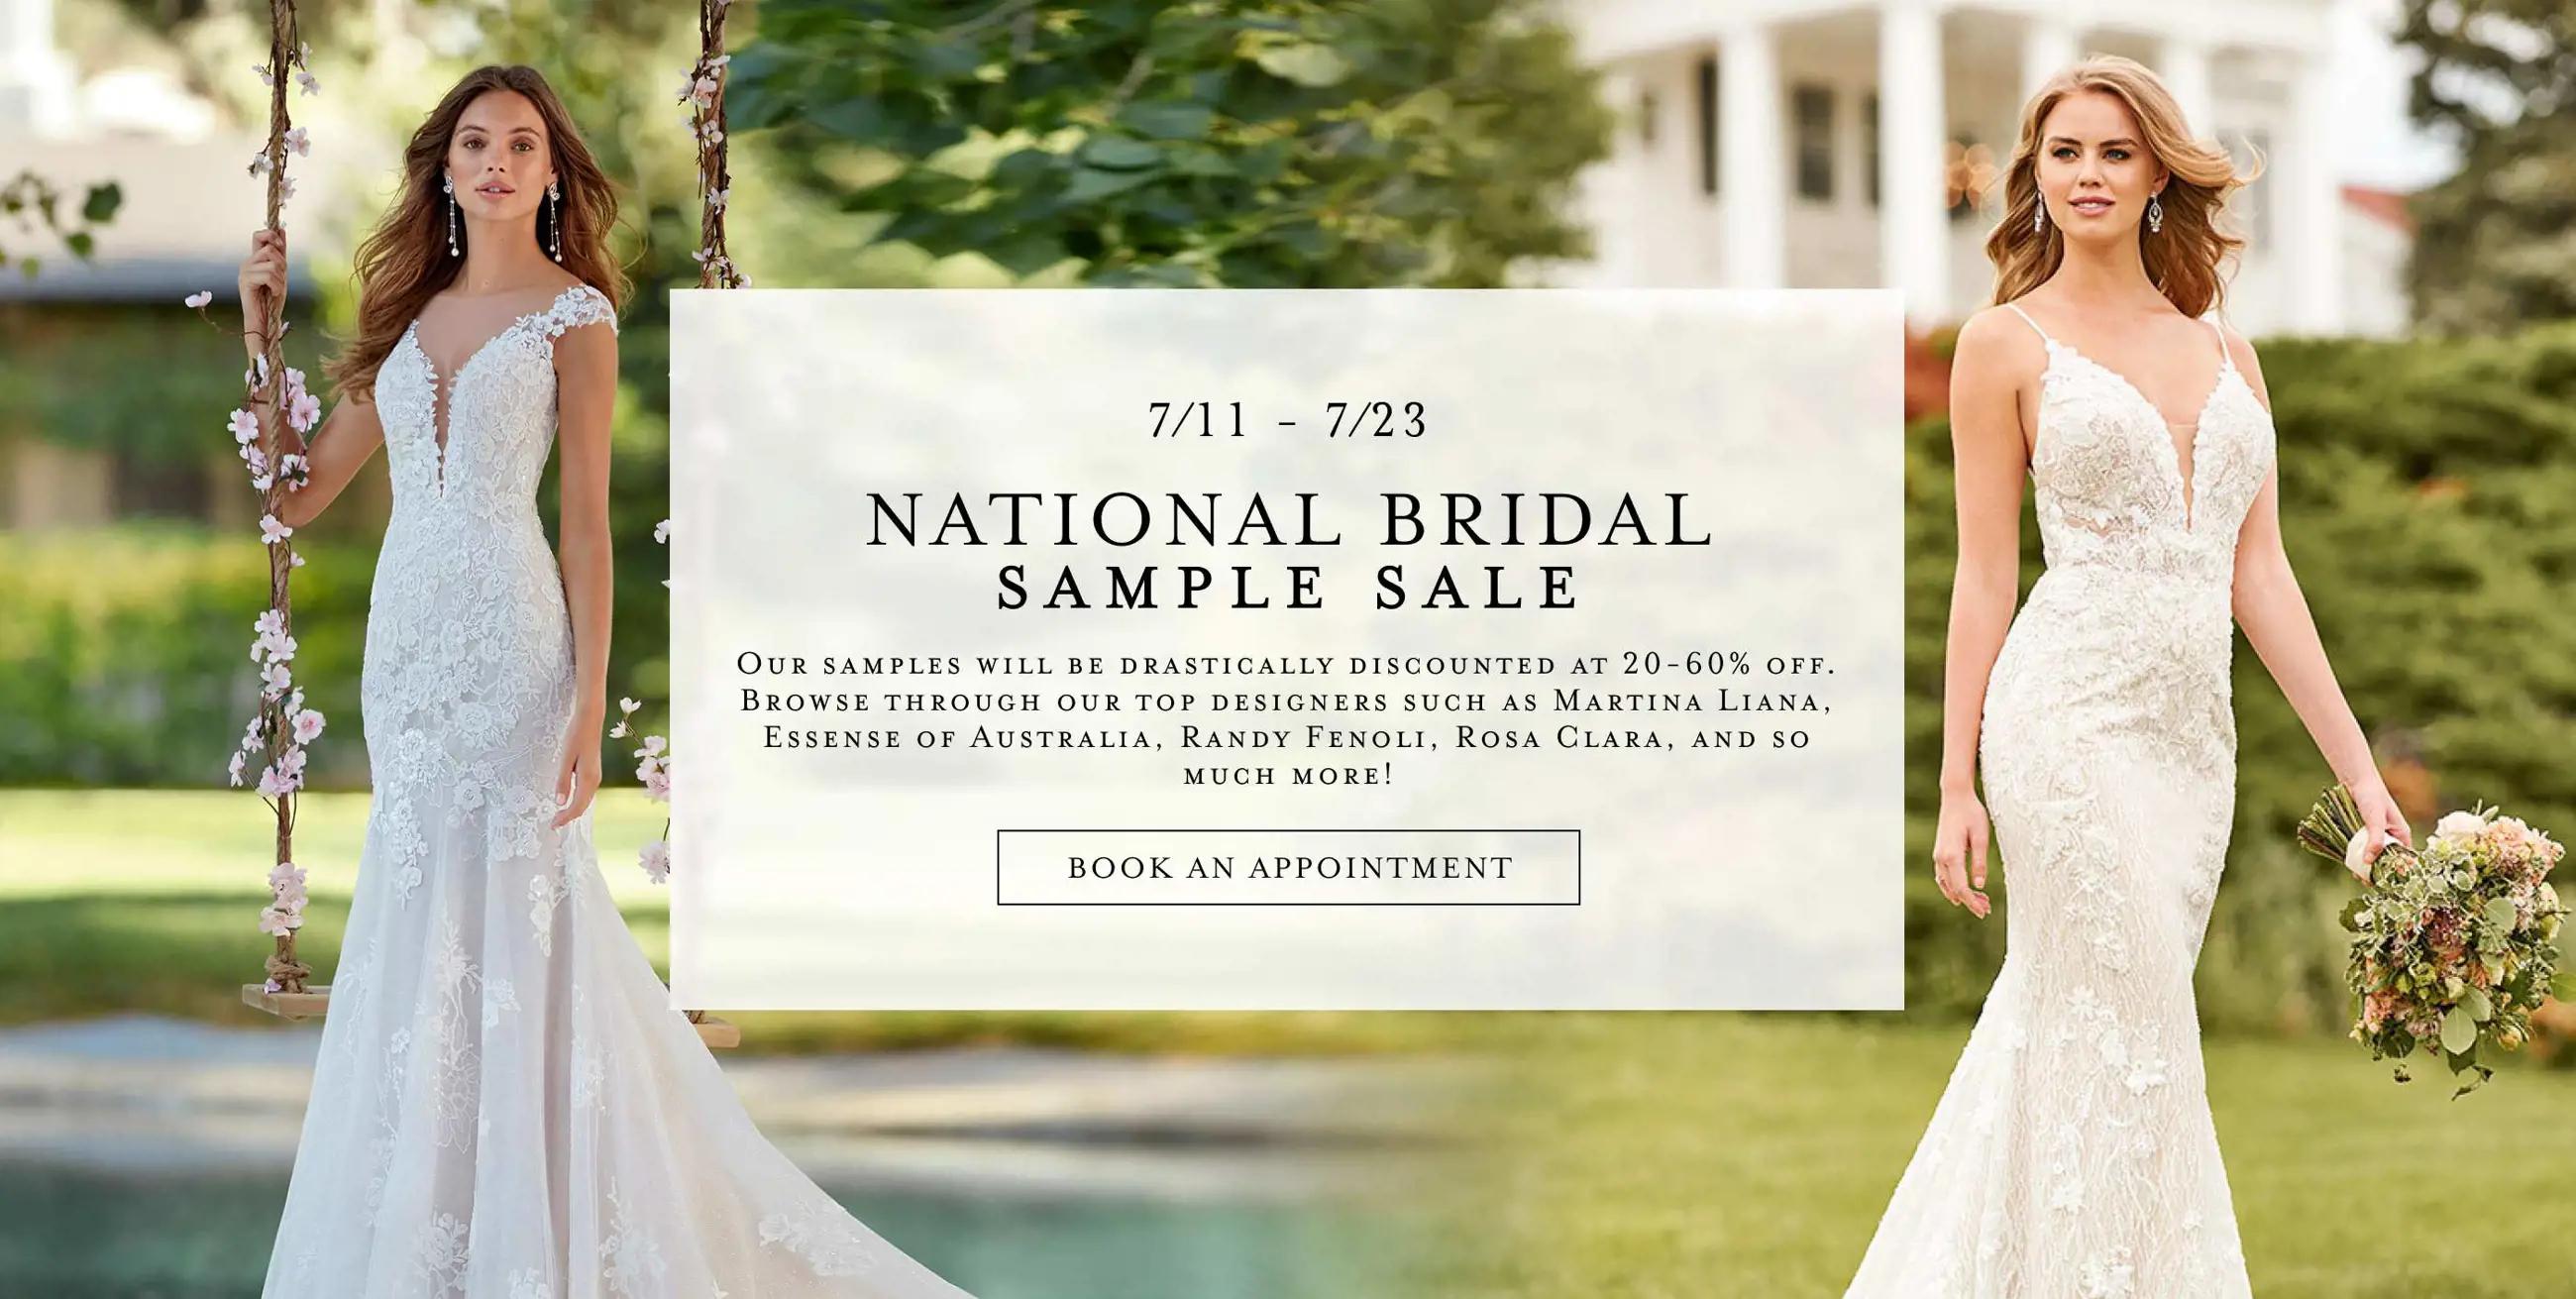 National Bridal Sample Sale at Bella Bridal Gallery